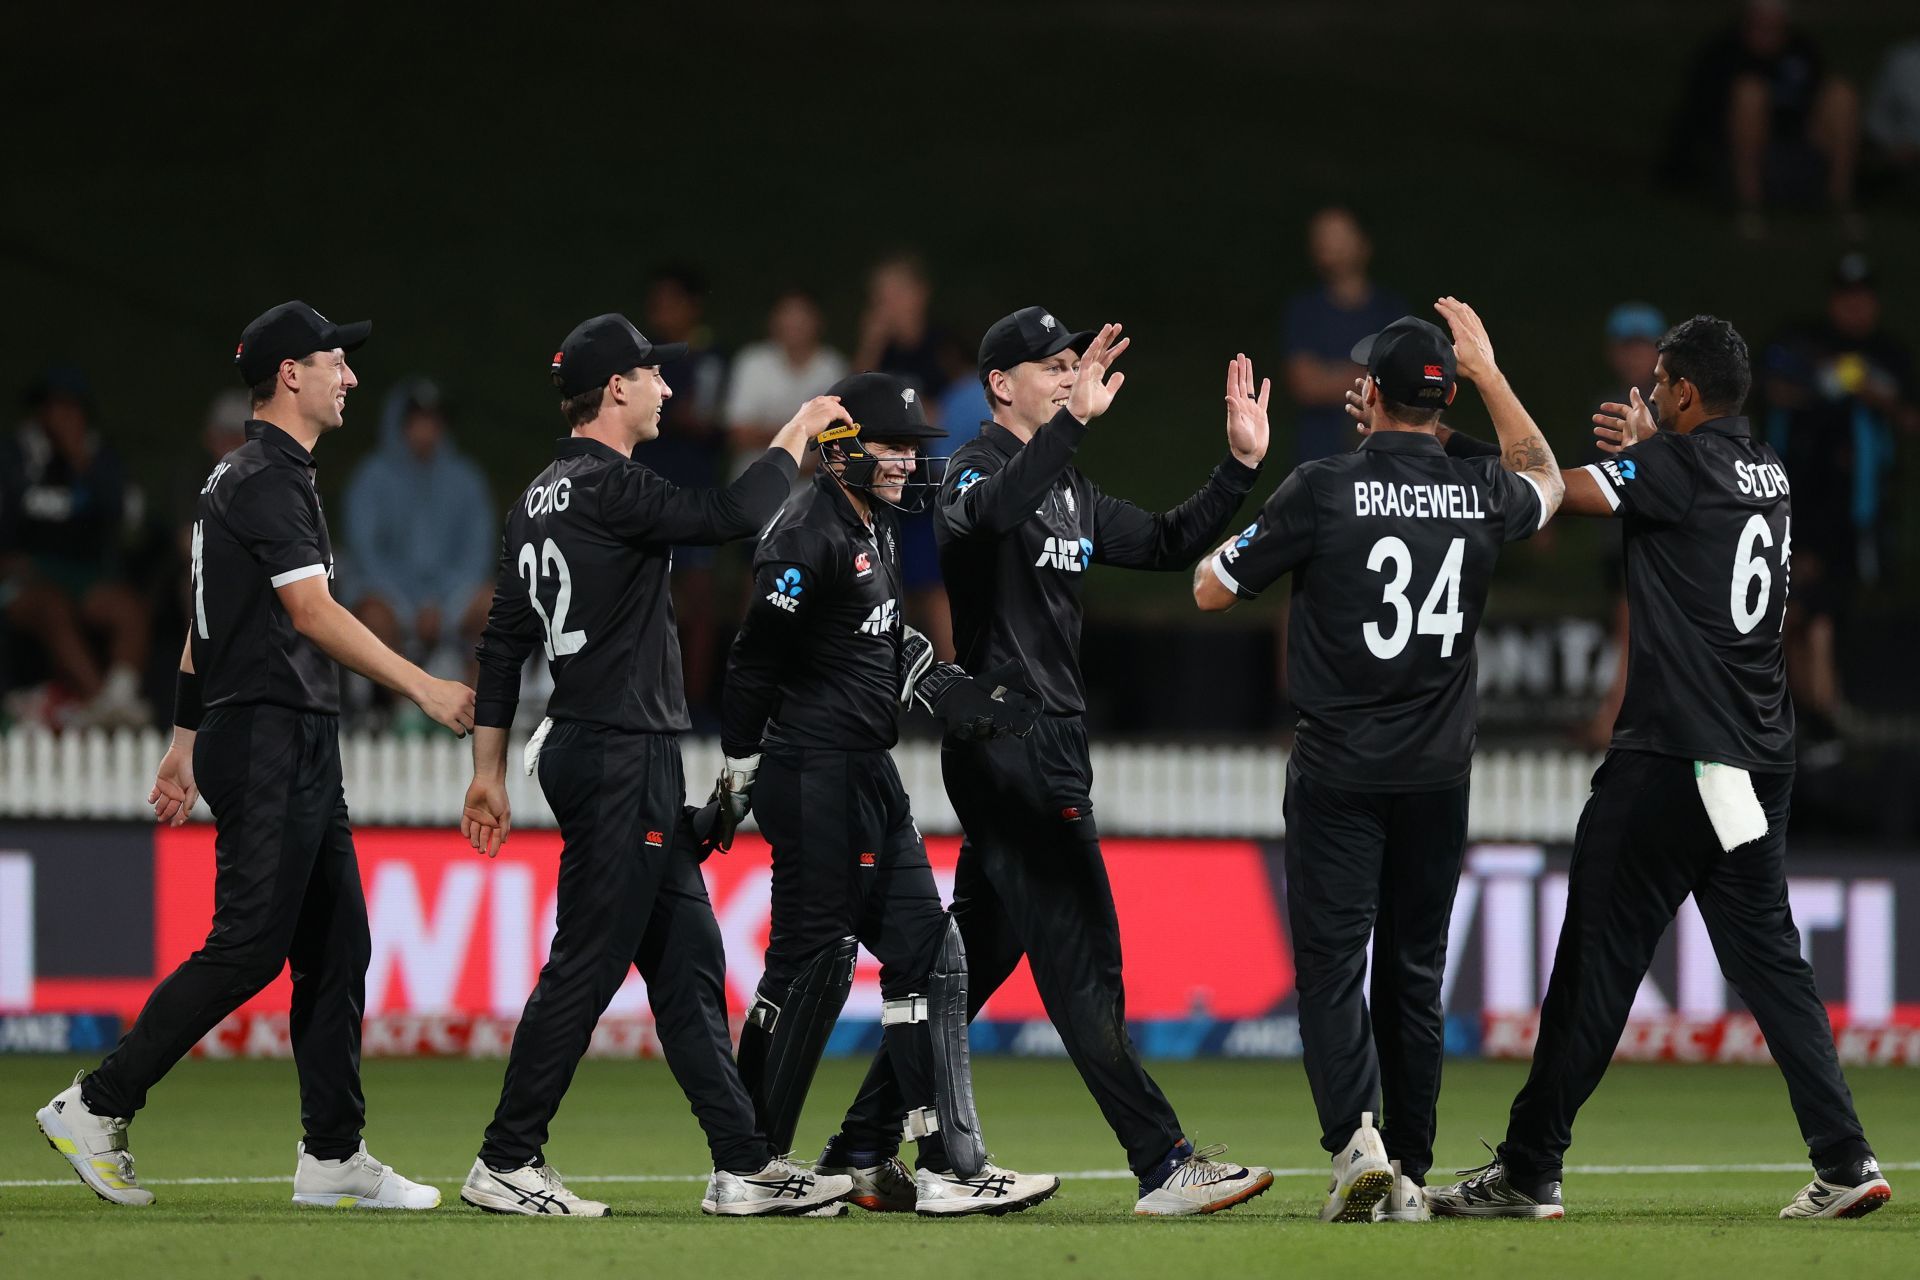 New Zealand v Netherlands - 3rd ODI (Image courtesy: Getty Images)